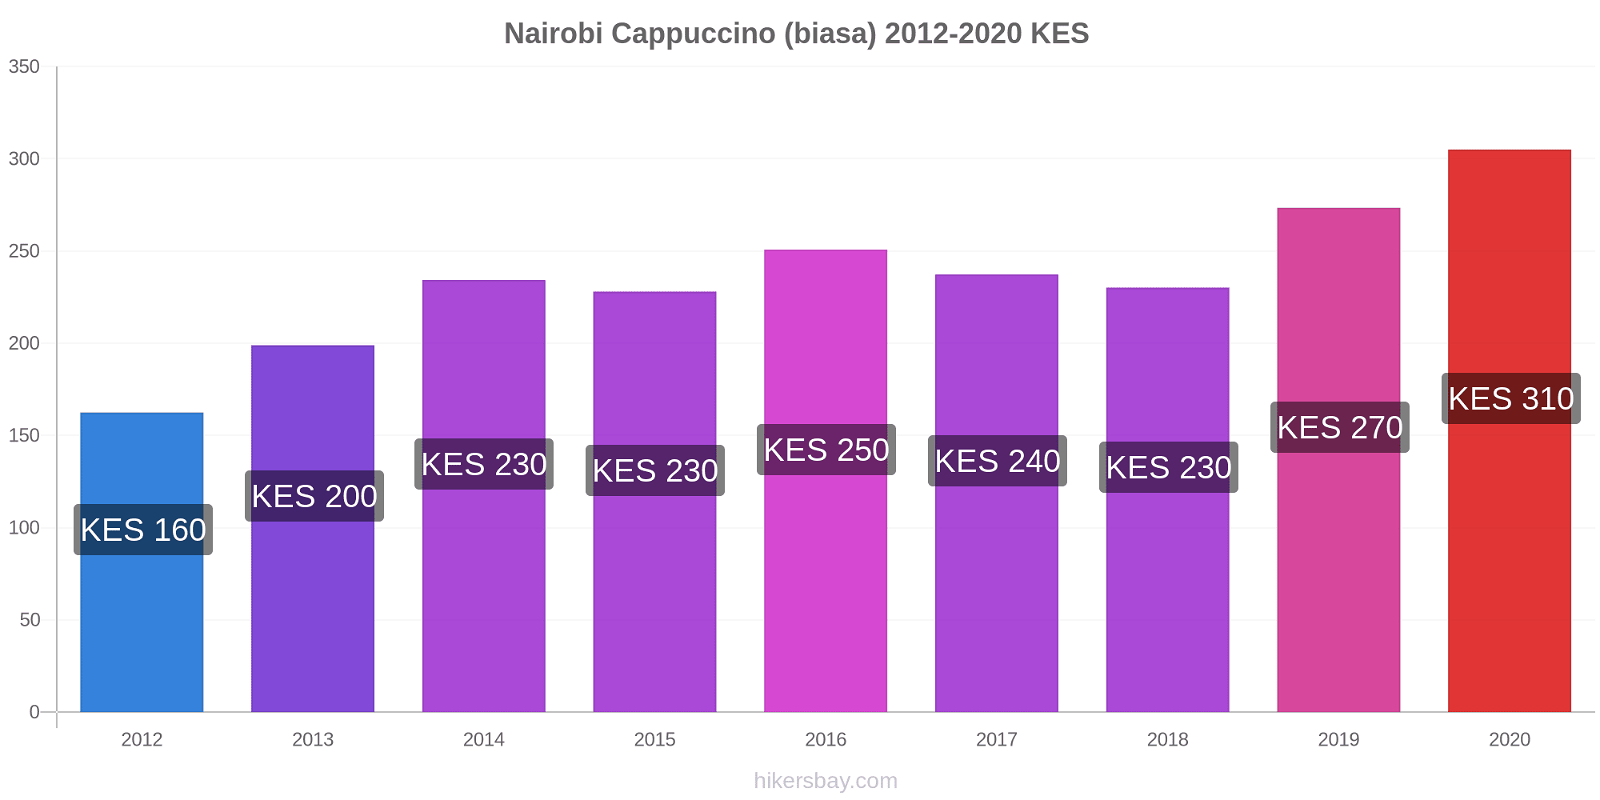 Nairobi perubahan harga Cappuccino (biasa) hikersbay.com